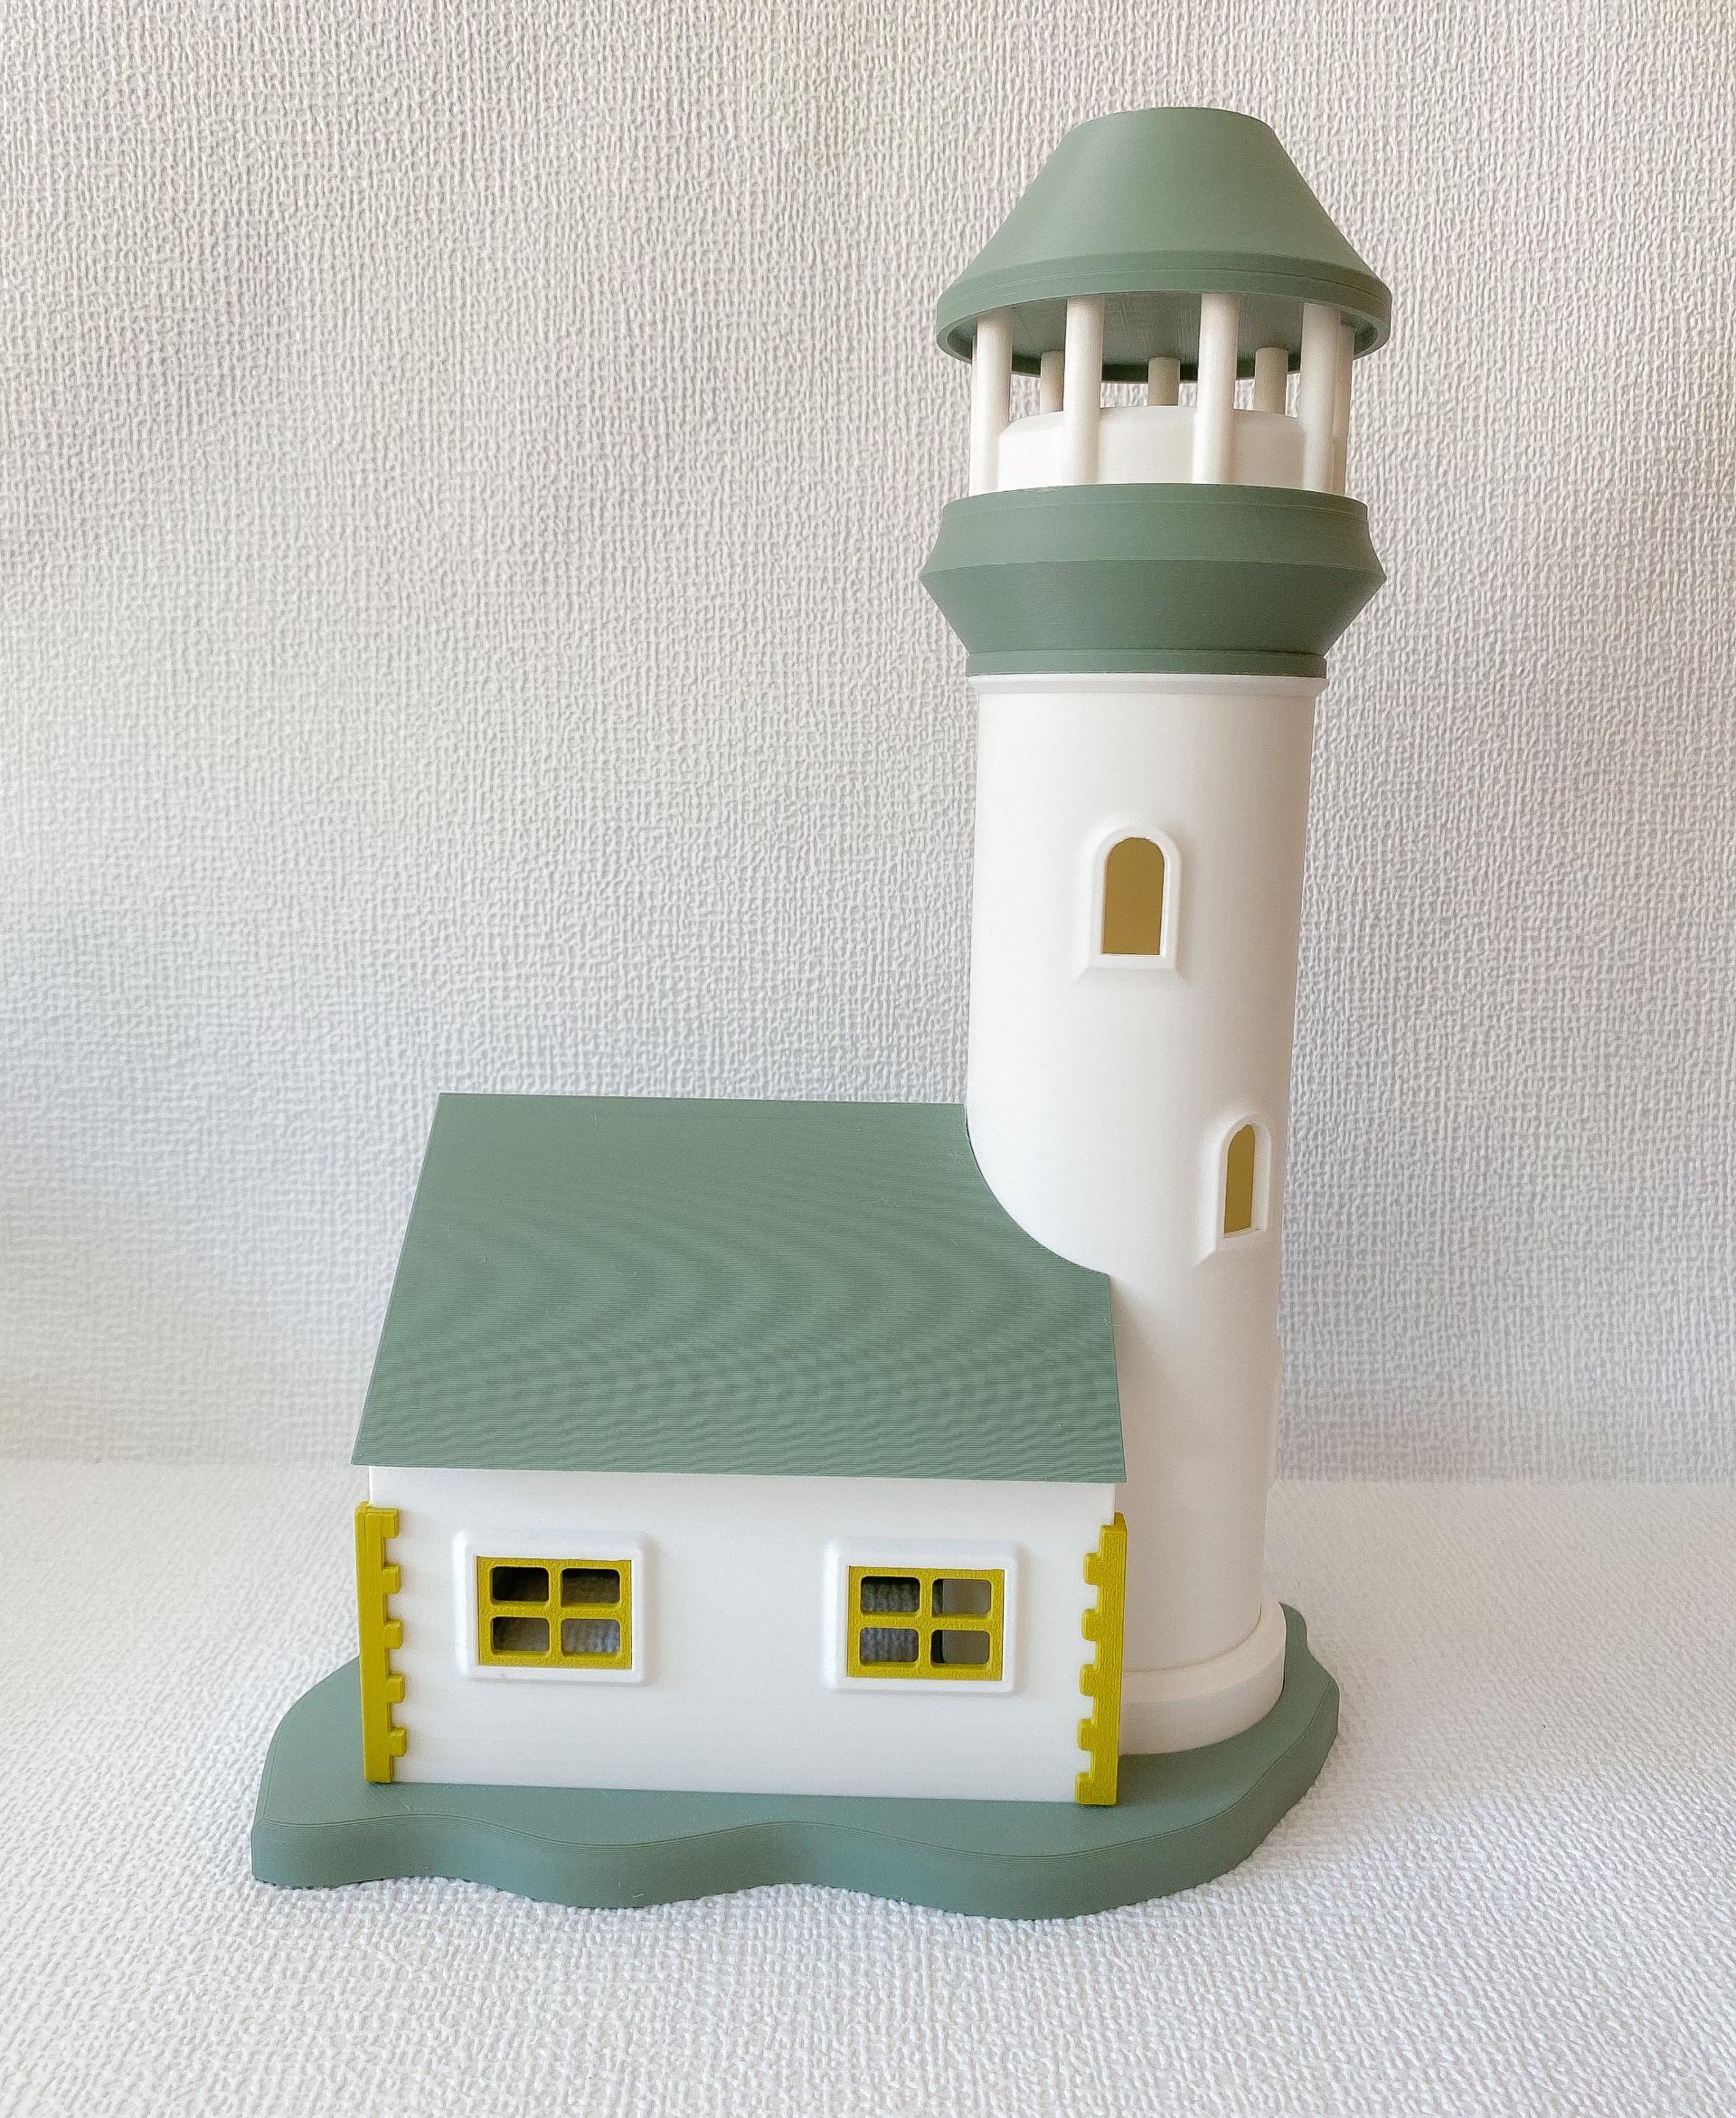 Lighthouse 7.1.4 - Beautiful lighthouse!
Polymaker filament. - 3d model